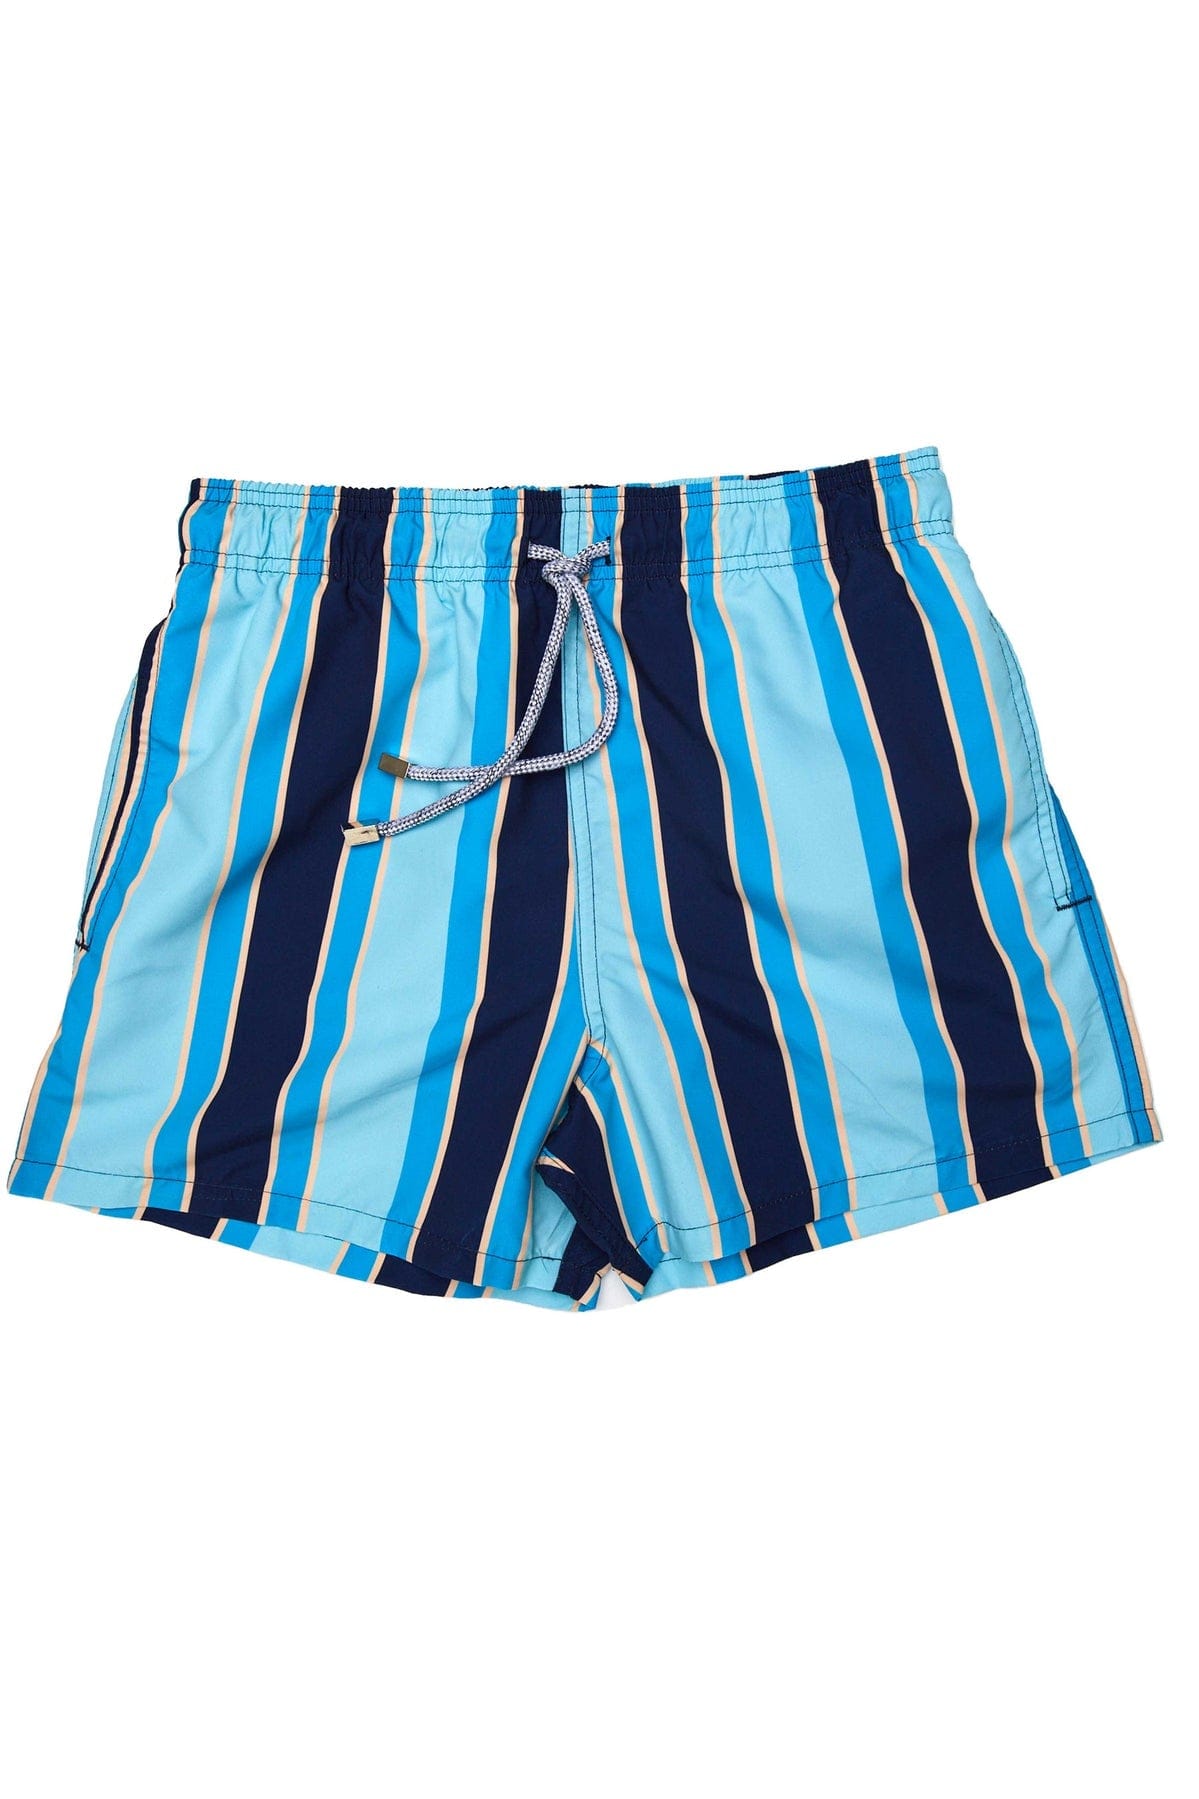 Le Club Apparel & Accessories > Clothing > Shorts Le Club Men's Swim Trunk Haya Blue 2022 Le Club Men's Swim Trunk Haya Blue